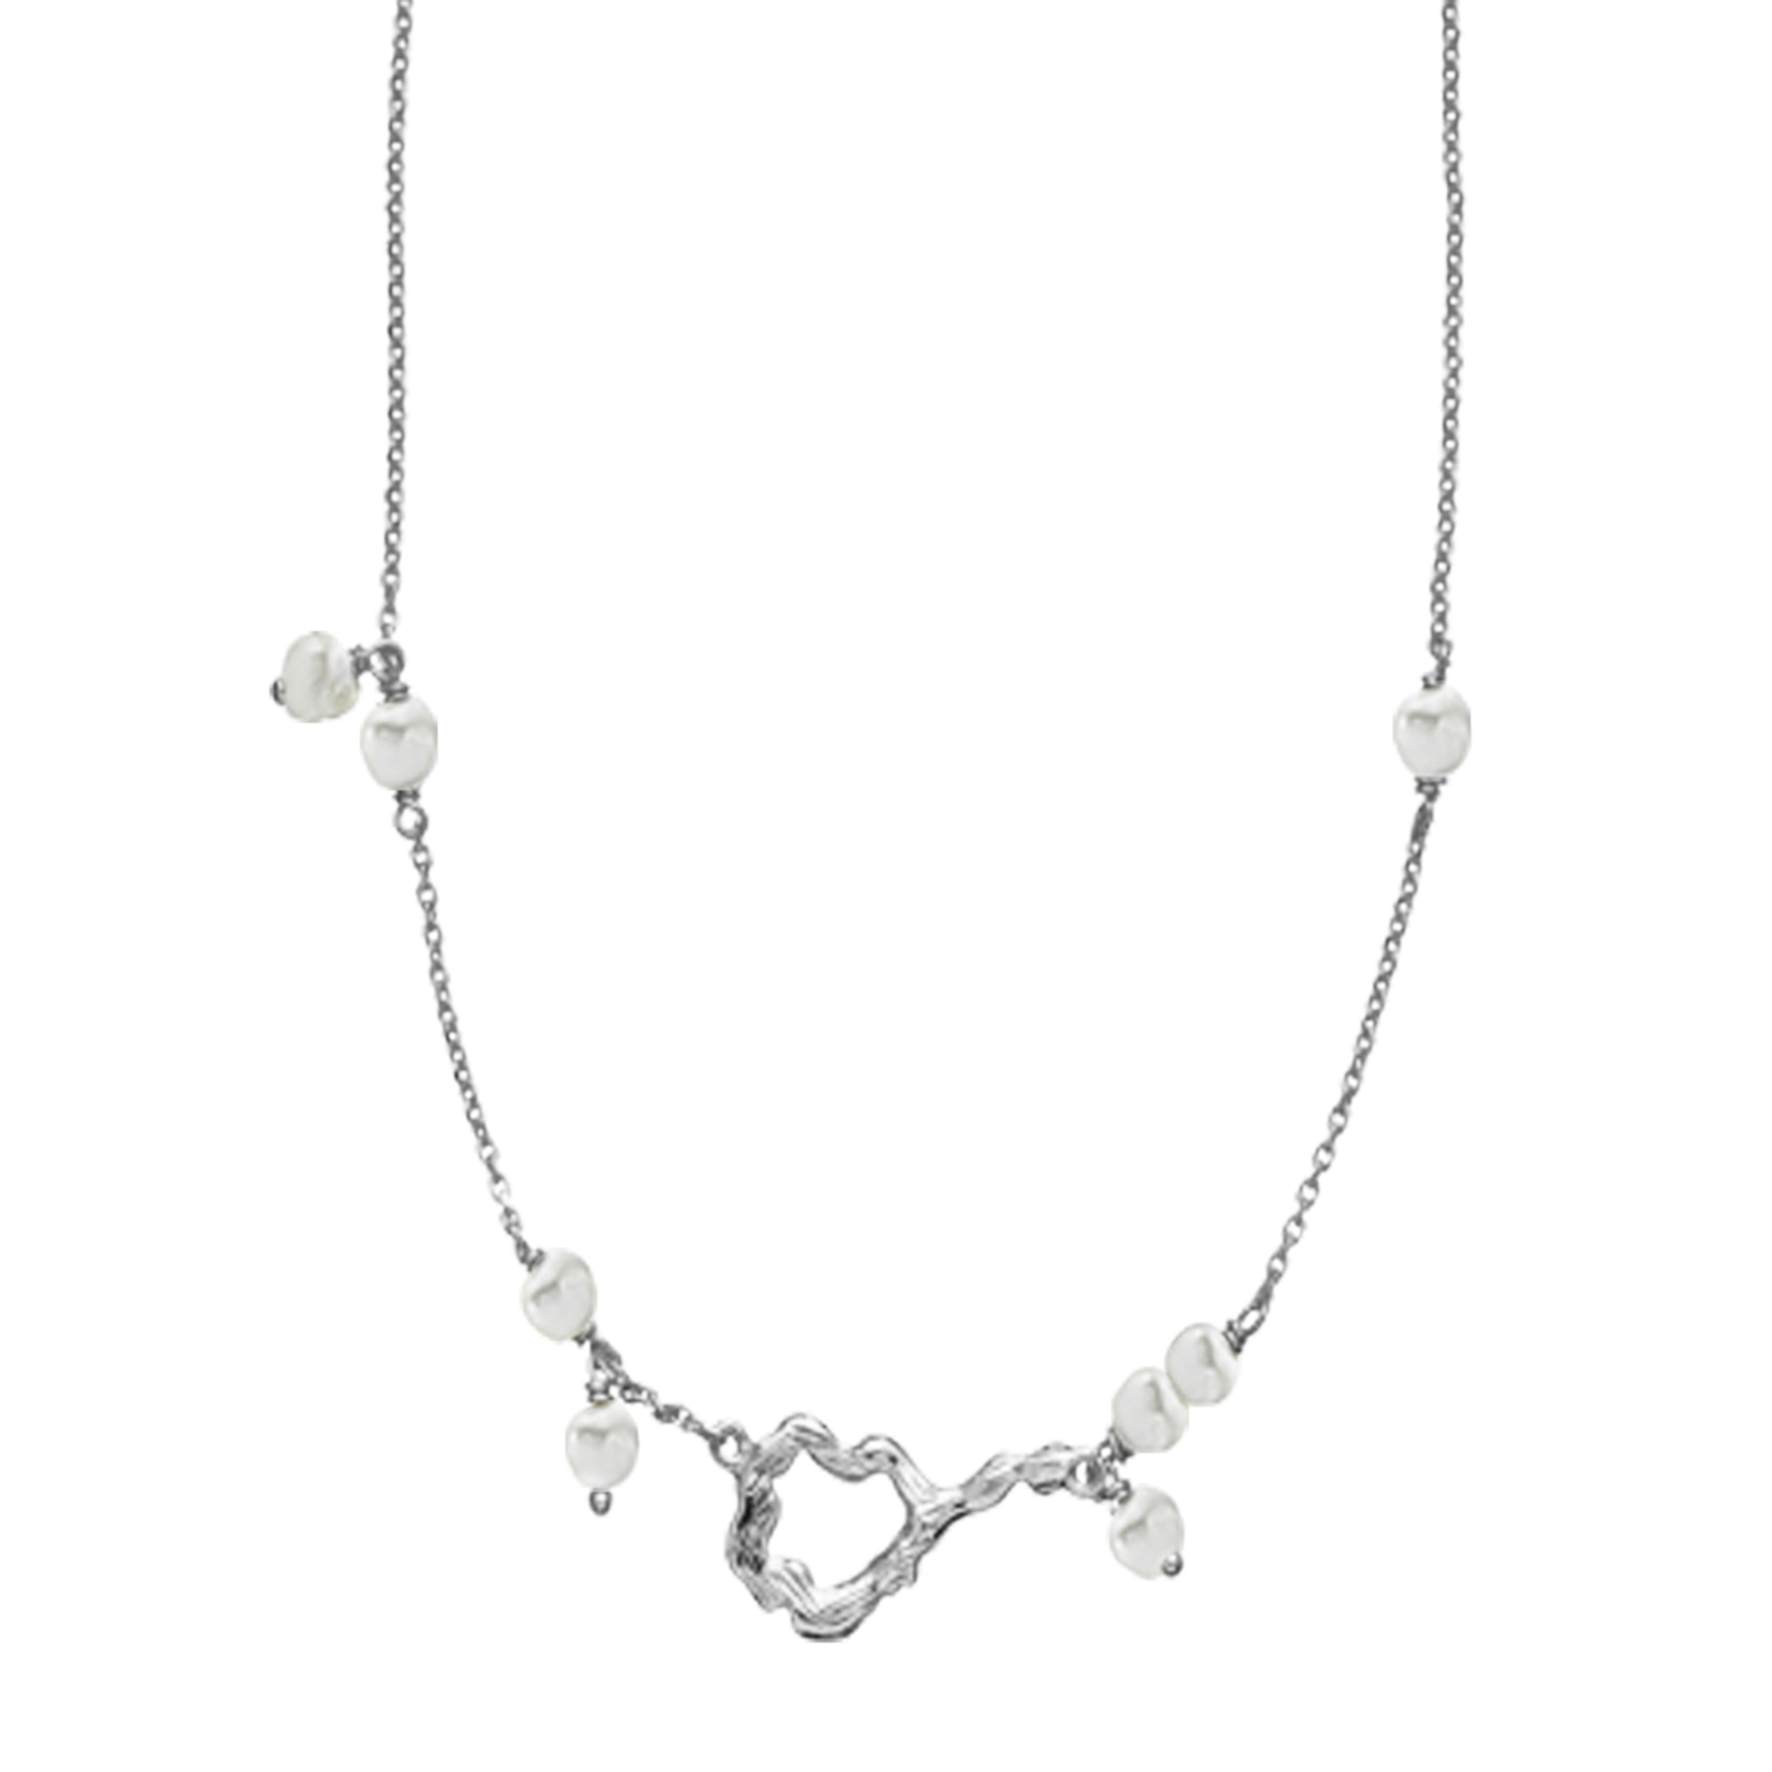 Lærke Bentsen By Sistie Necklace With Pearls fra Sistie i Sølv Sterling 925|Freshwater Pearl